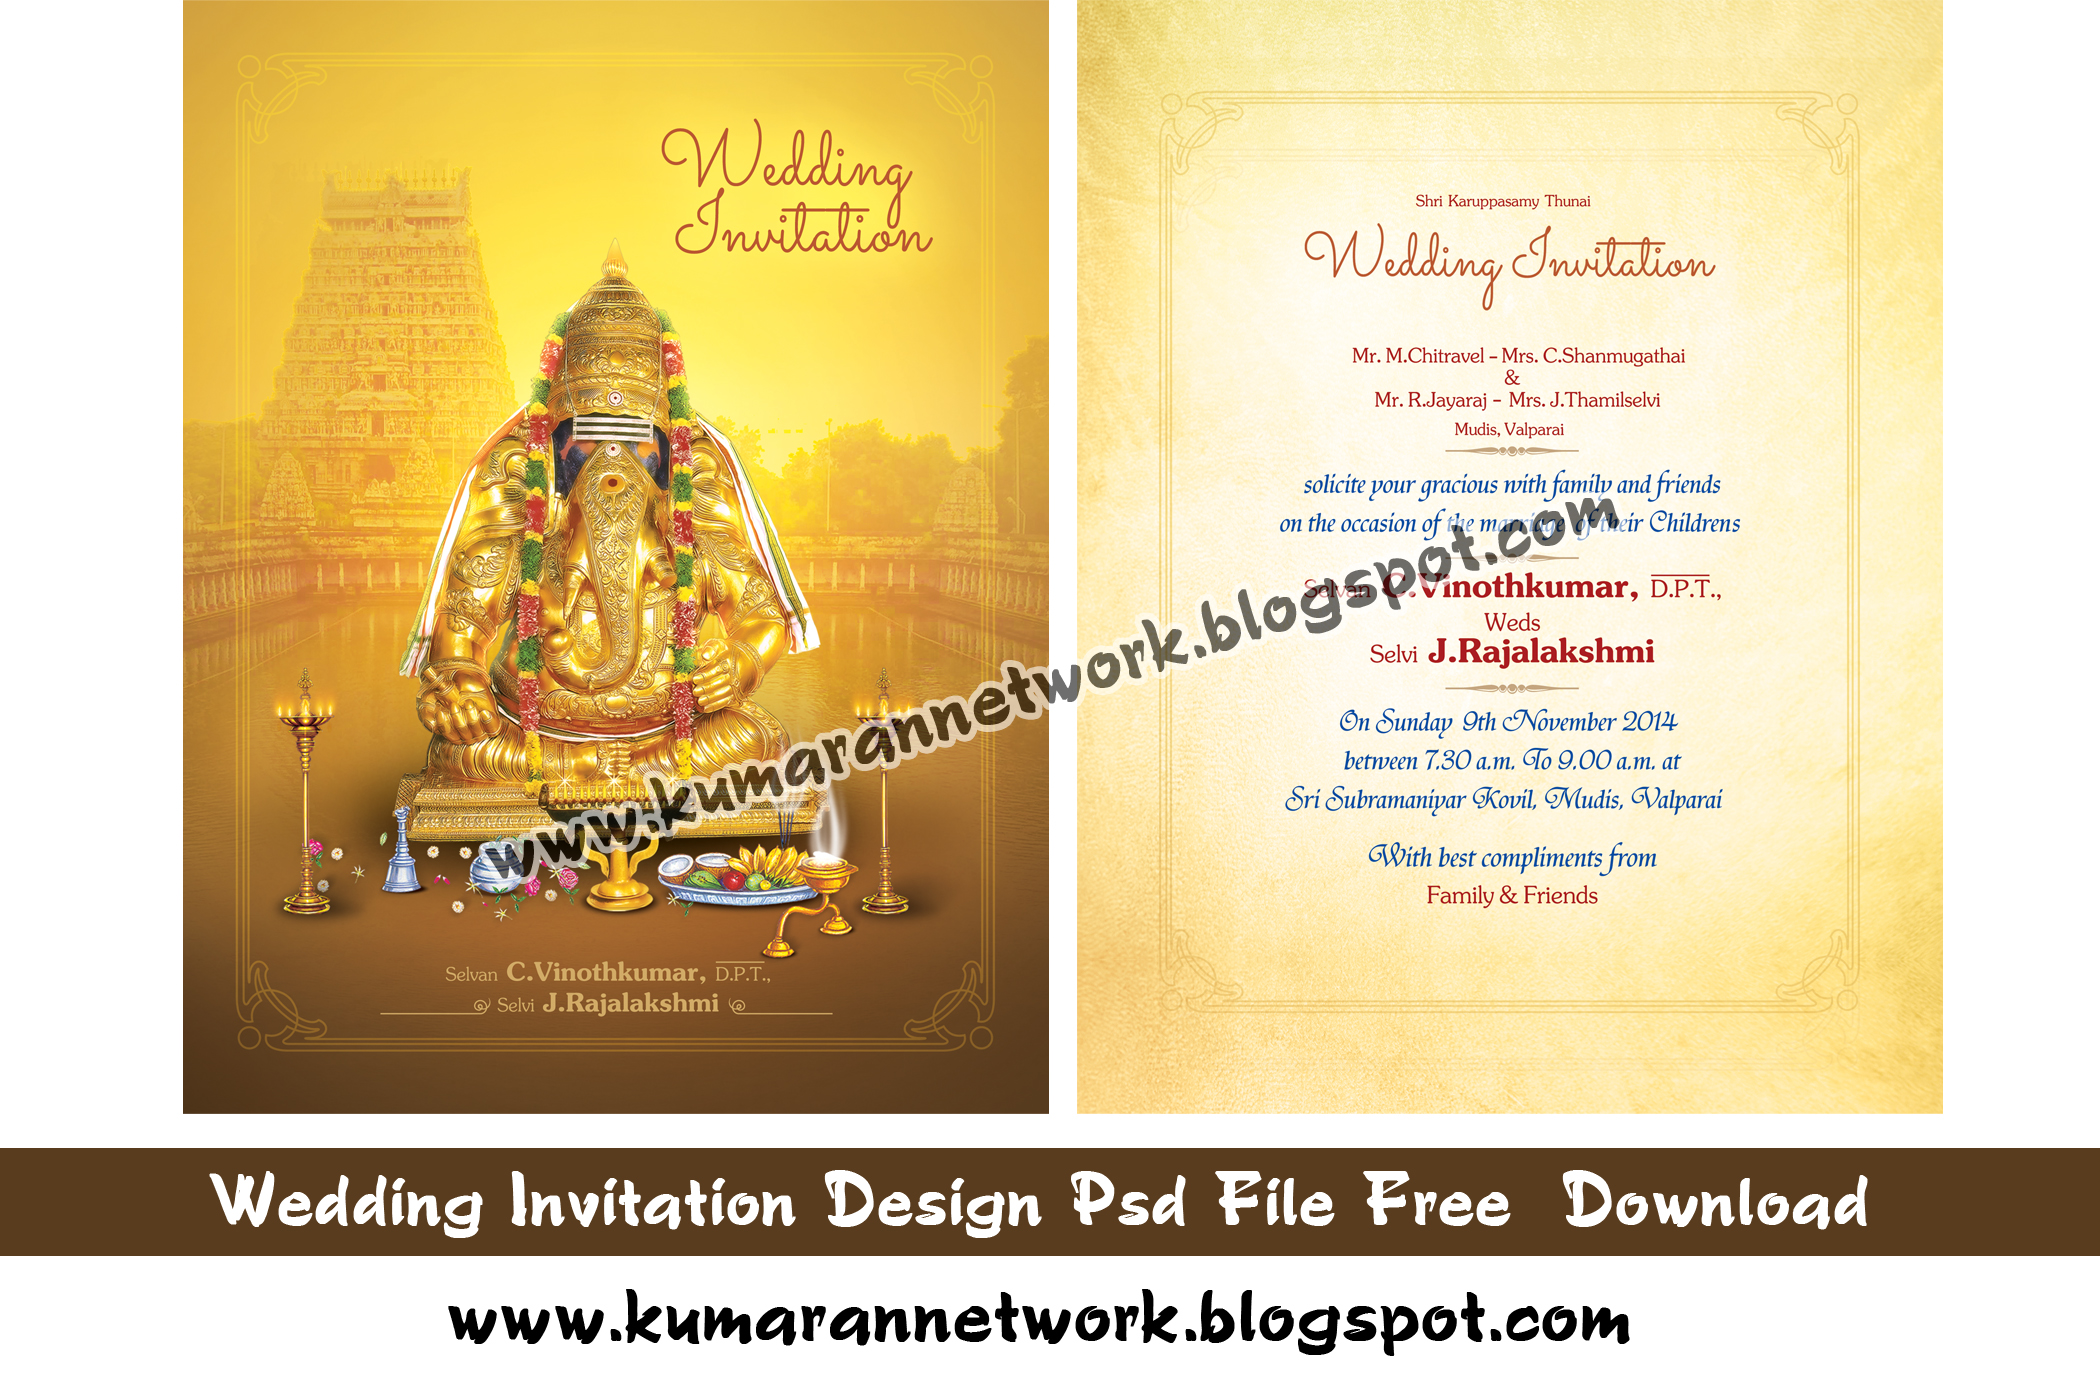 Wedding Invitation Design Psd File Free Download - Kumaran Network